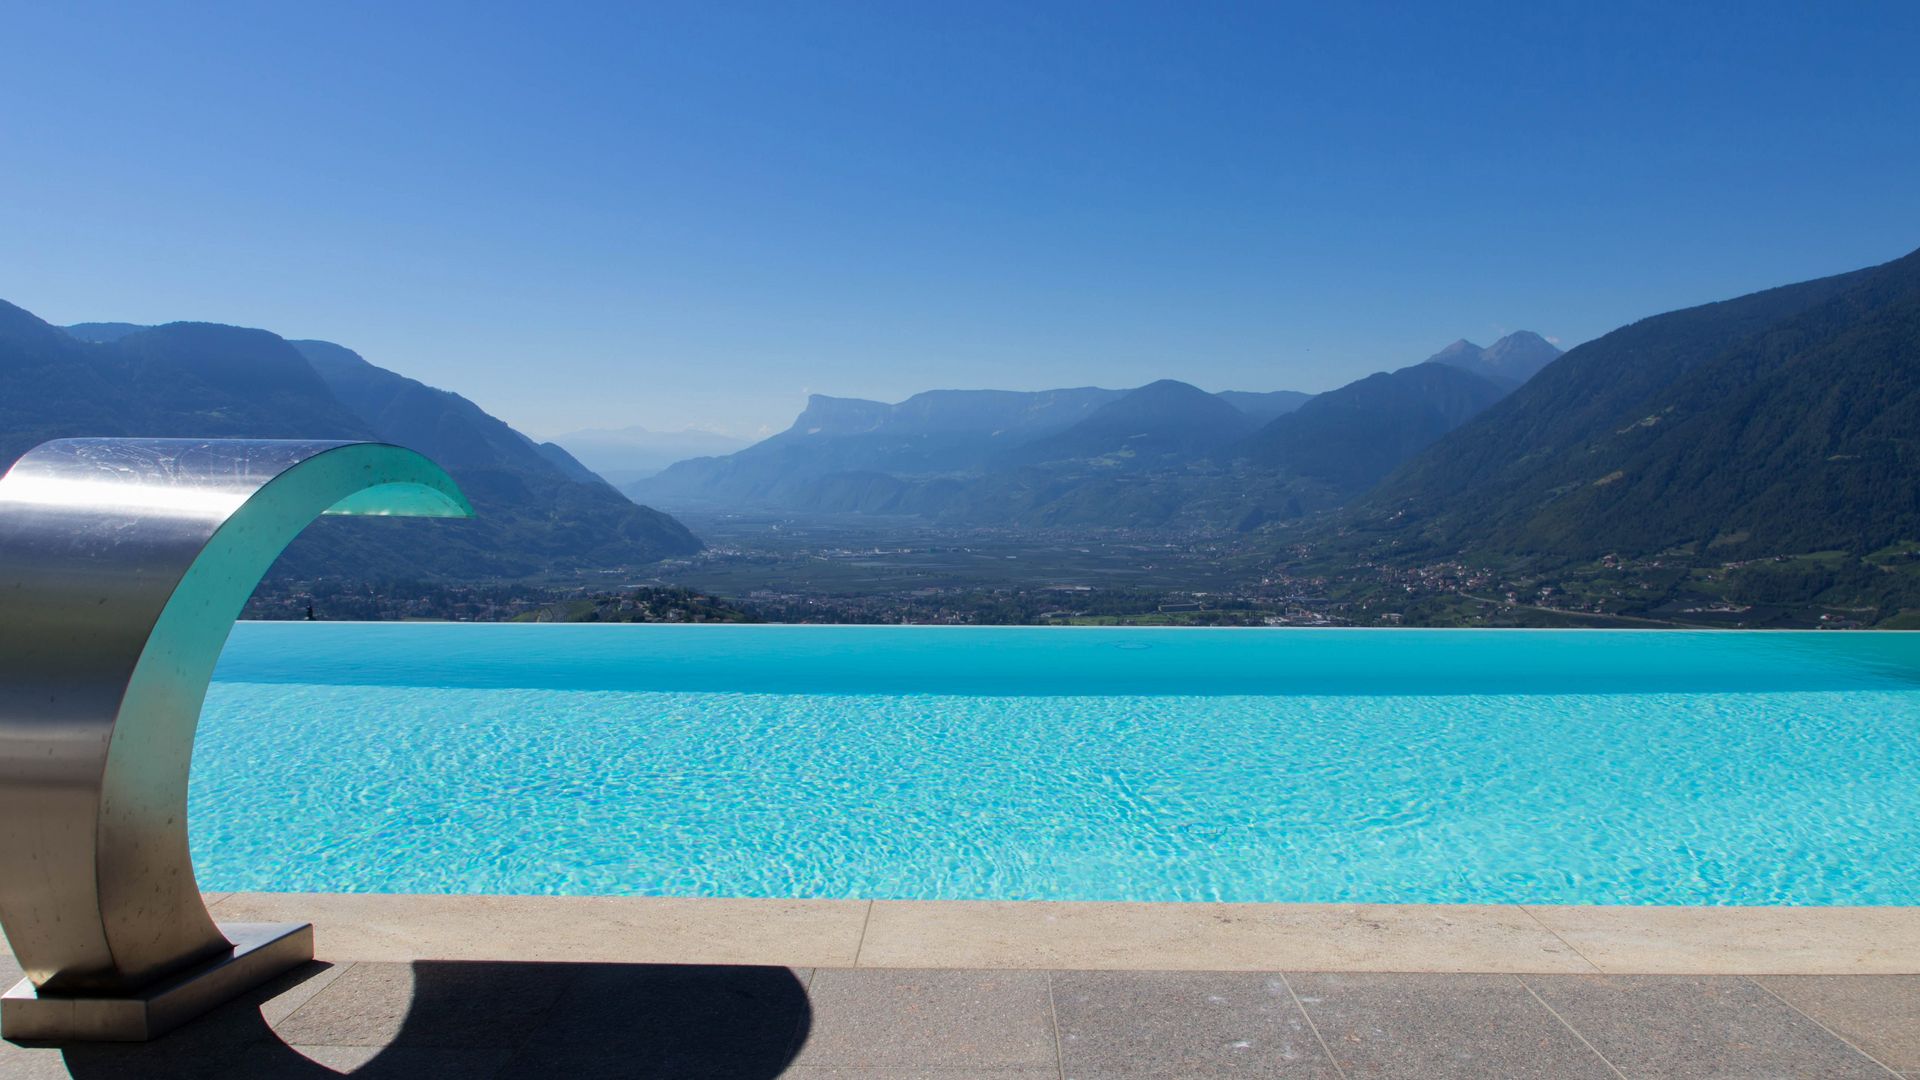 Piscina panoramica Infinity Pool vista panoramica Merano Valle dell'Adige vacanza Tirolo Hotel Lechner